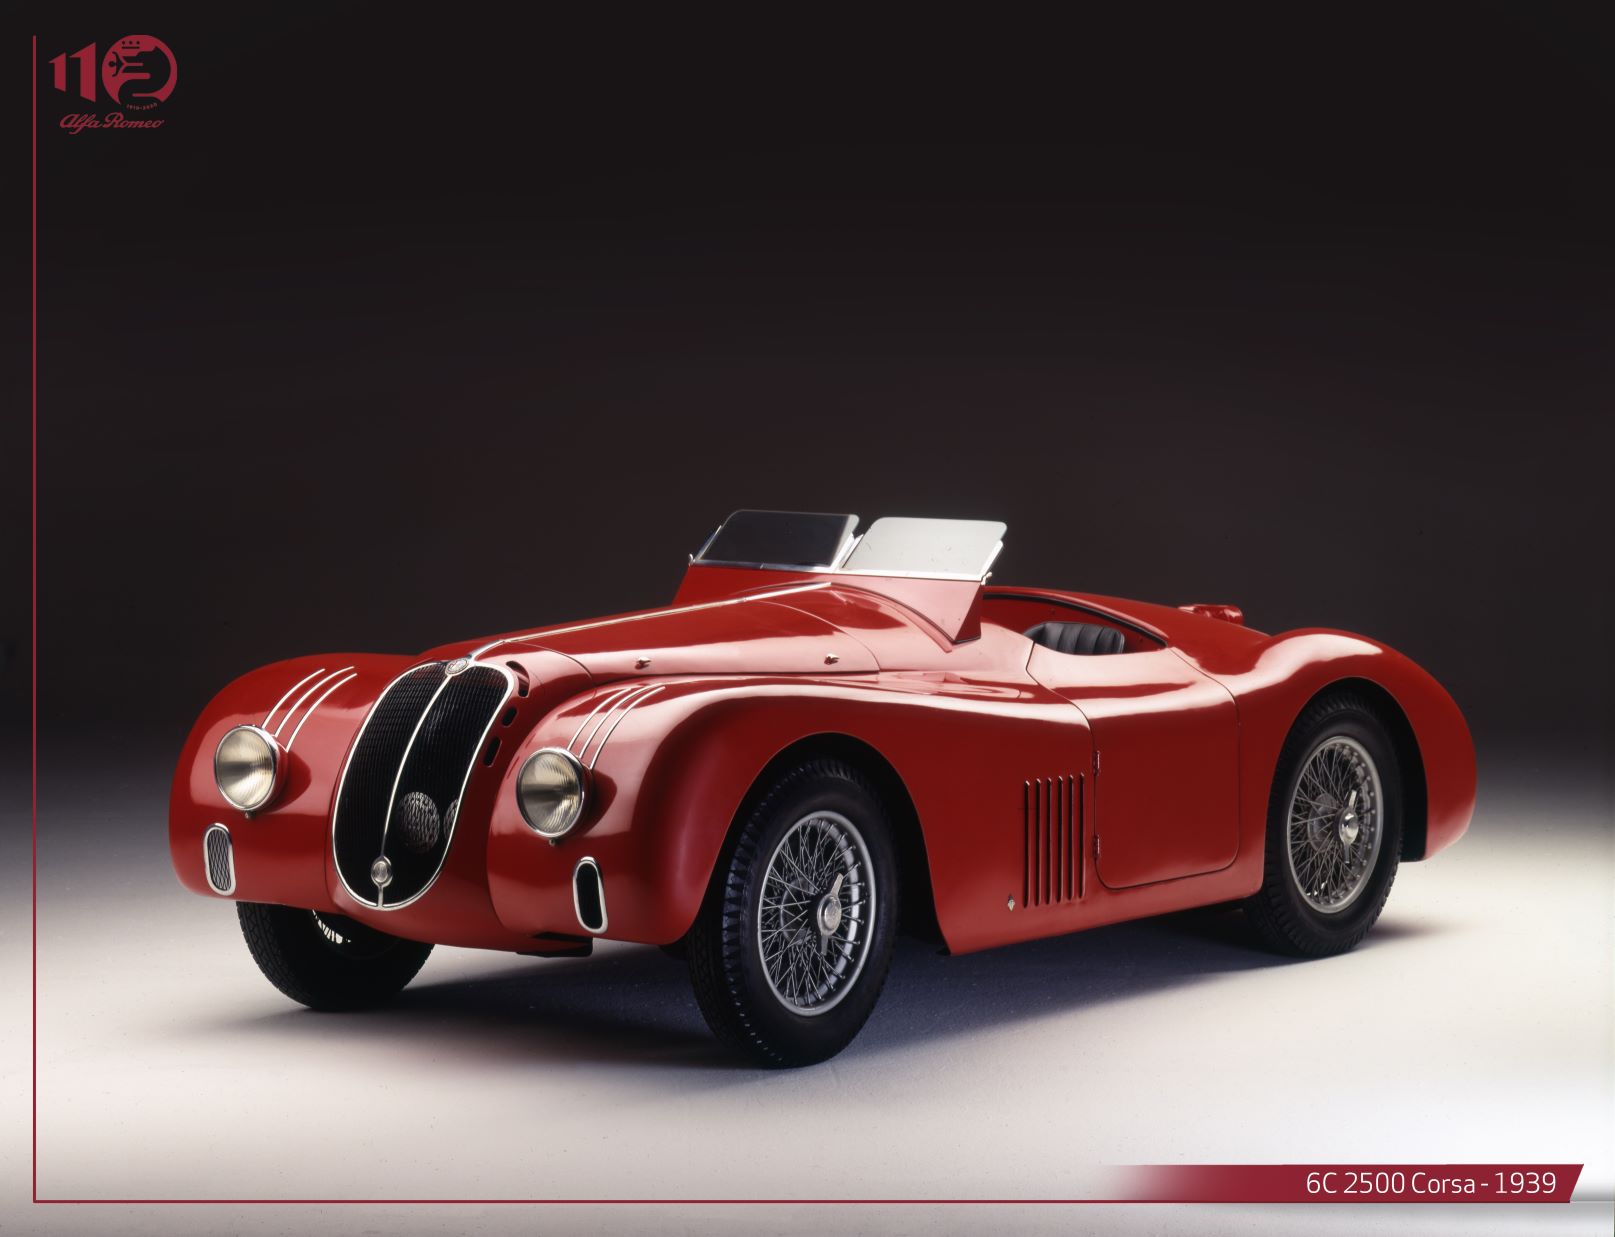 Alfa Romeo apresenta o programa heritage "Alfa Romeo Classiche" 18